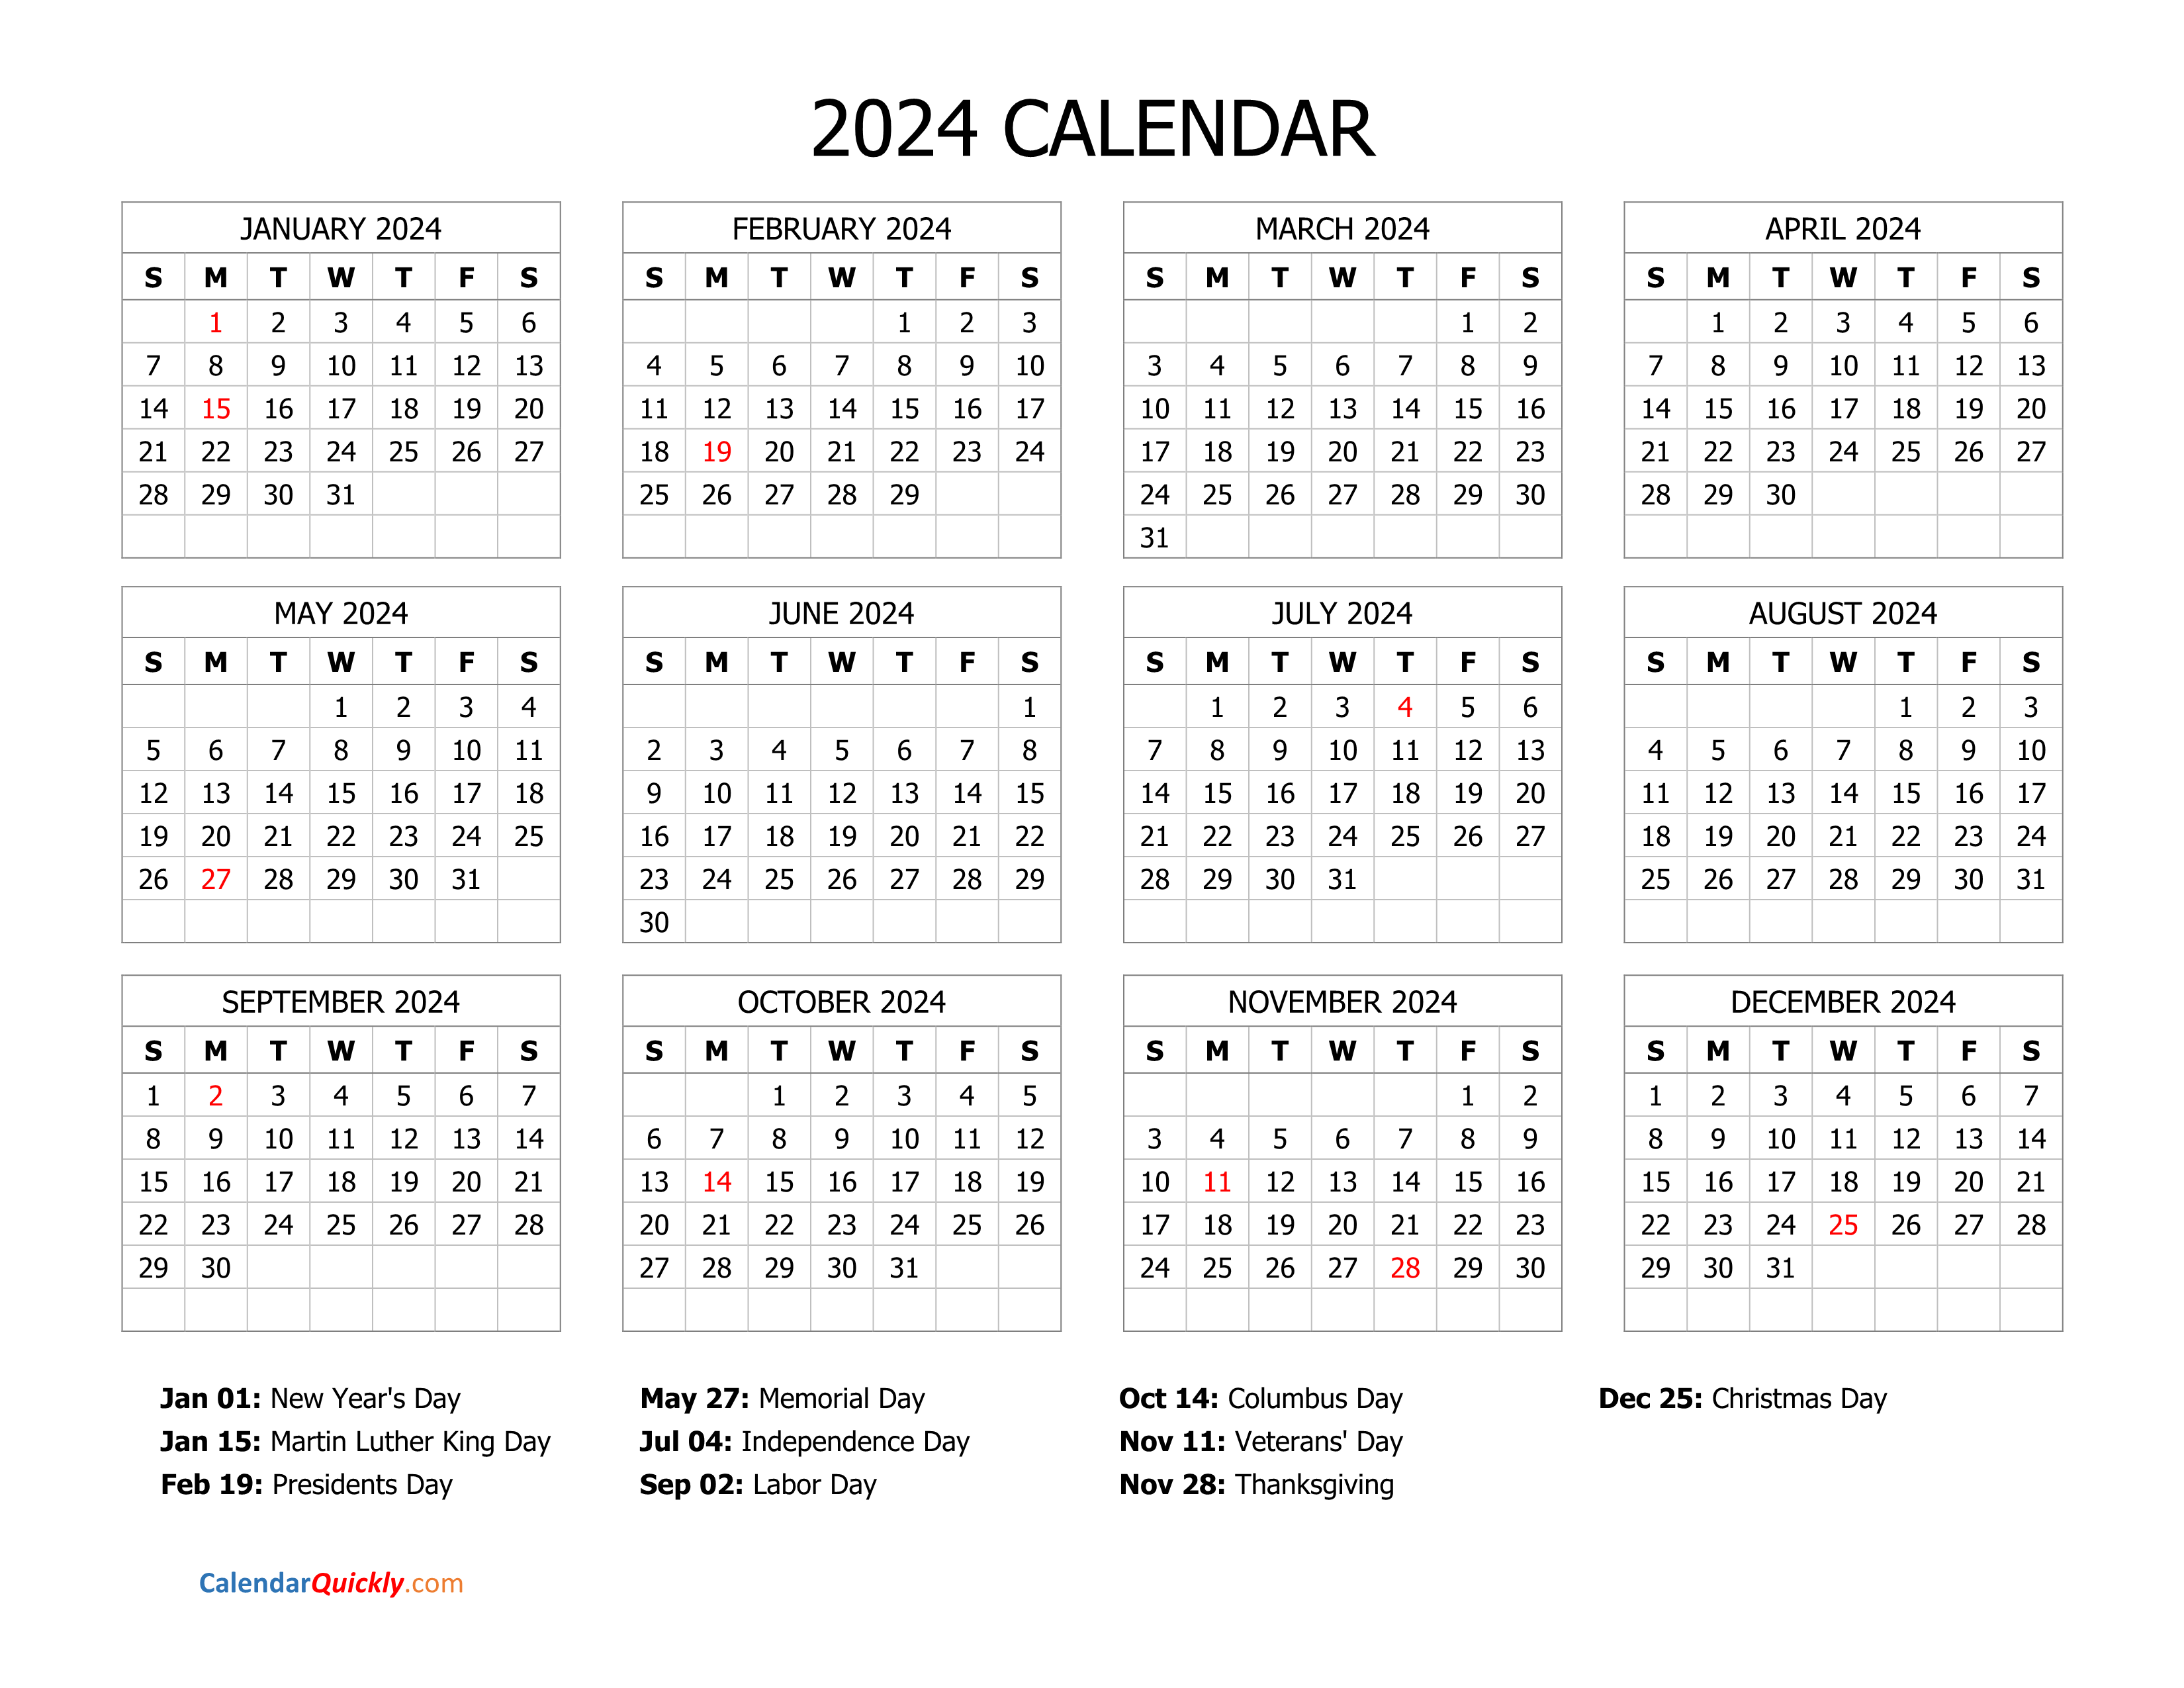 Printable Calendar 2024 With Holidays - Free Printable 2024 Calendar December 24calendars